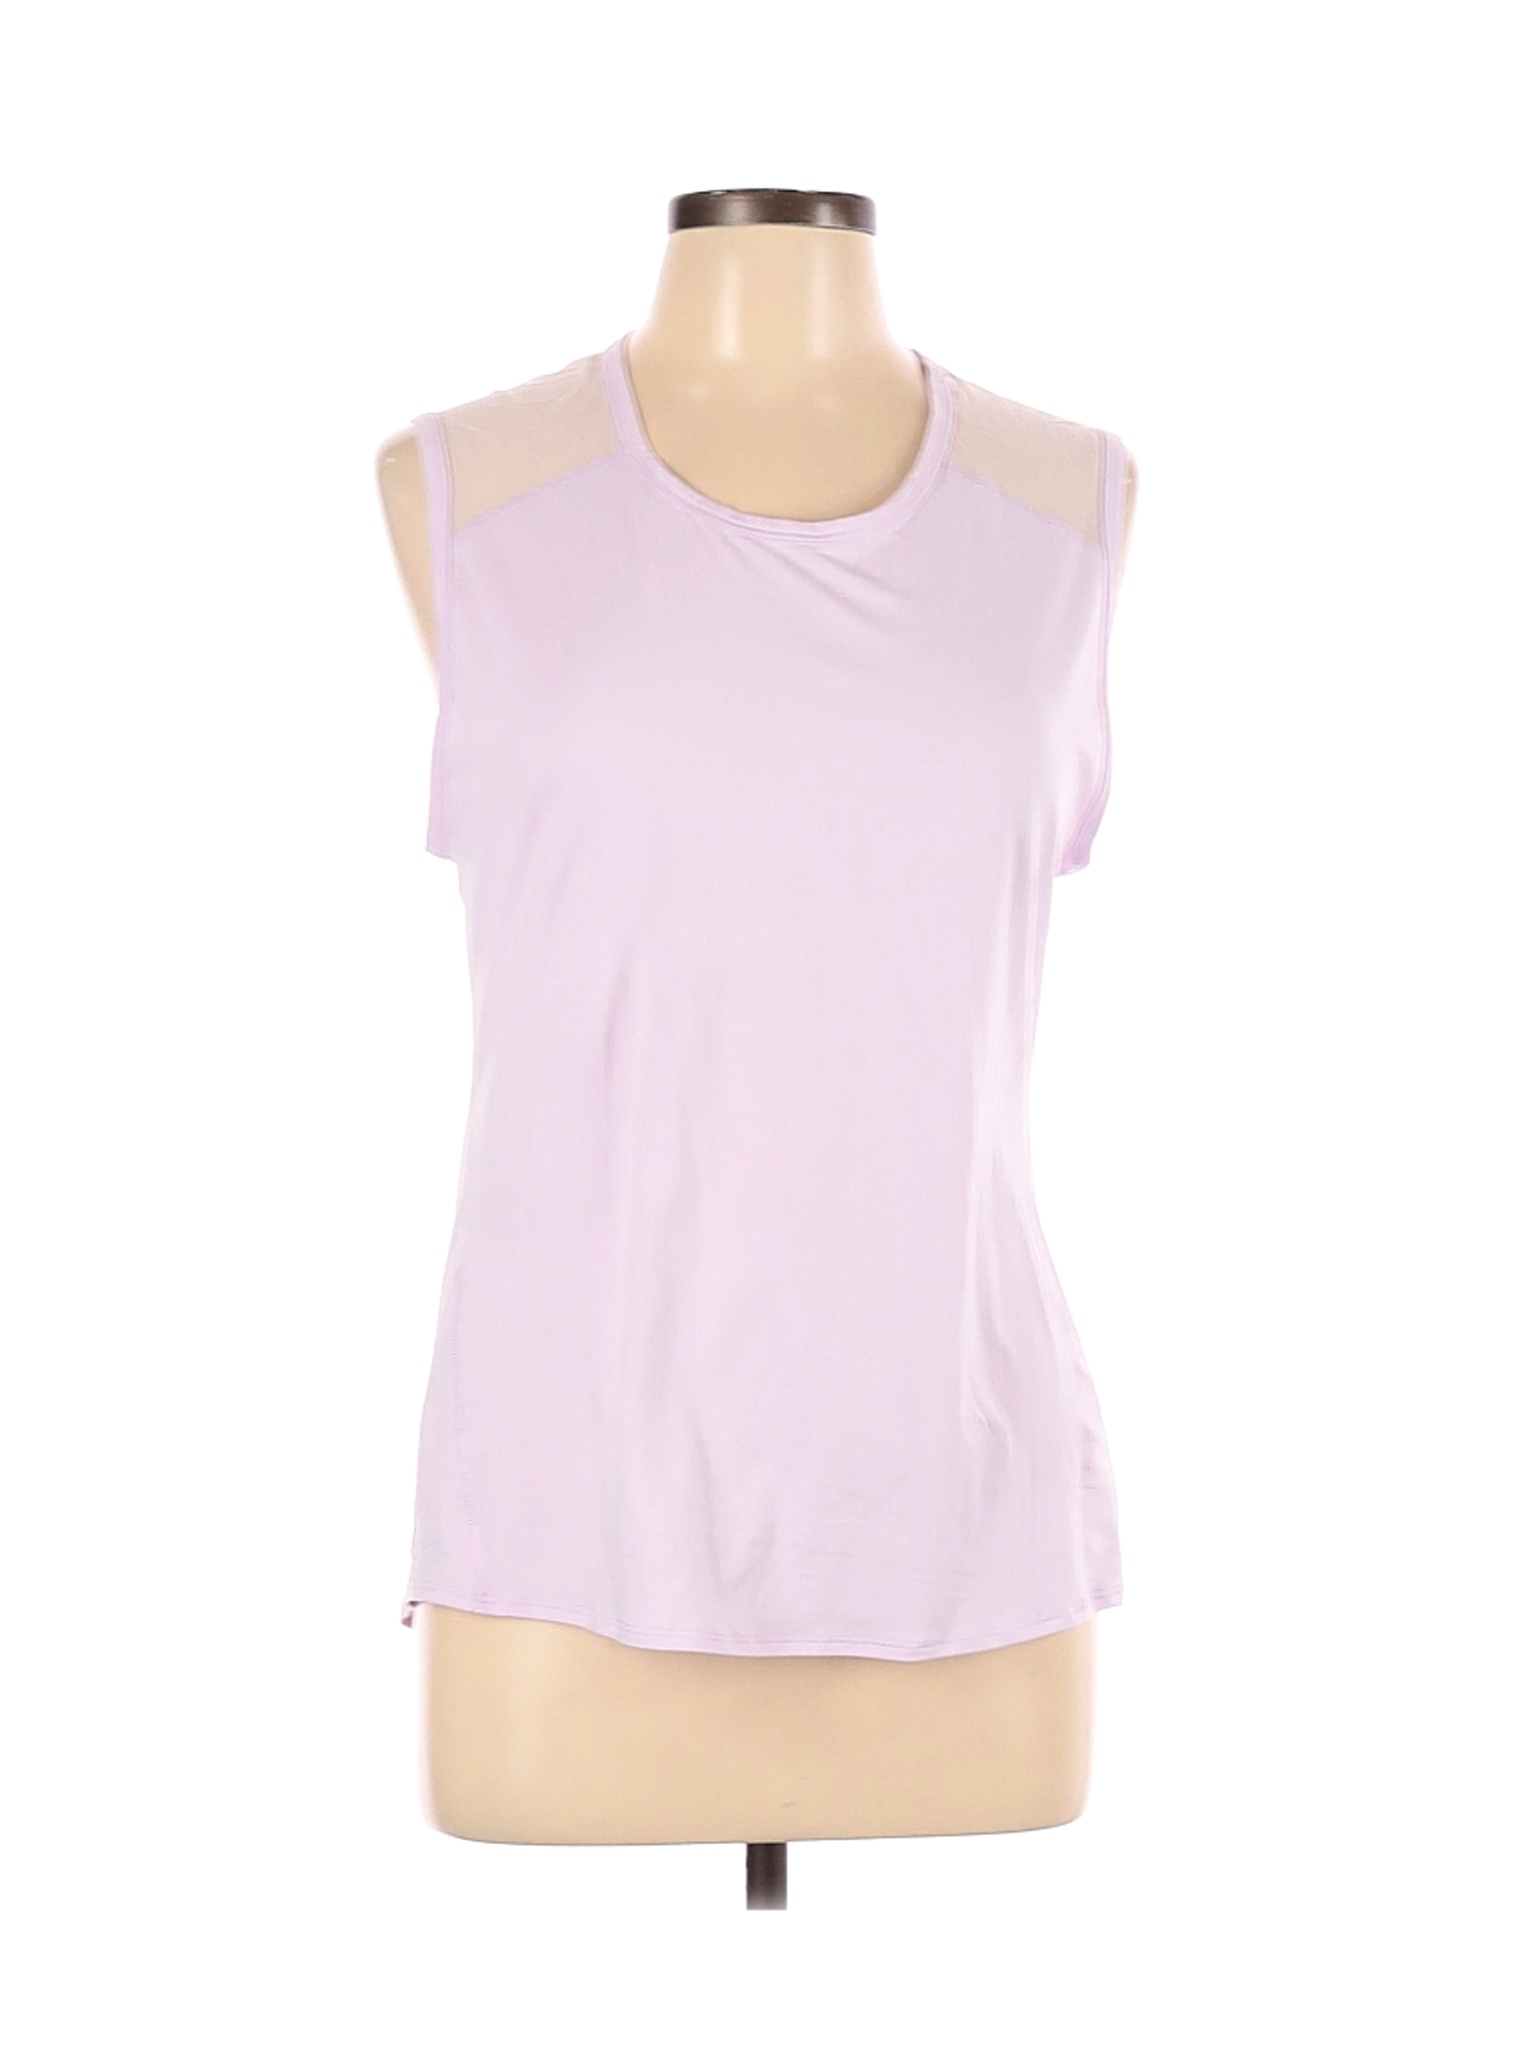 Athleta Women Pink Active T-Shirt M | eBay